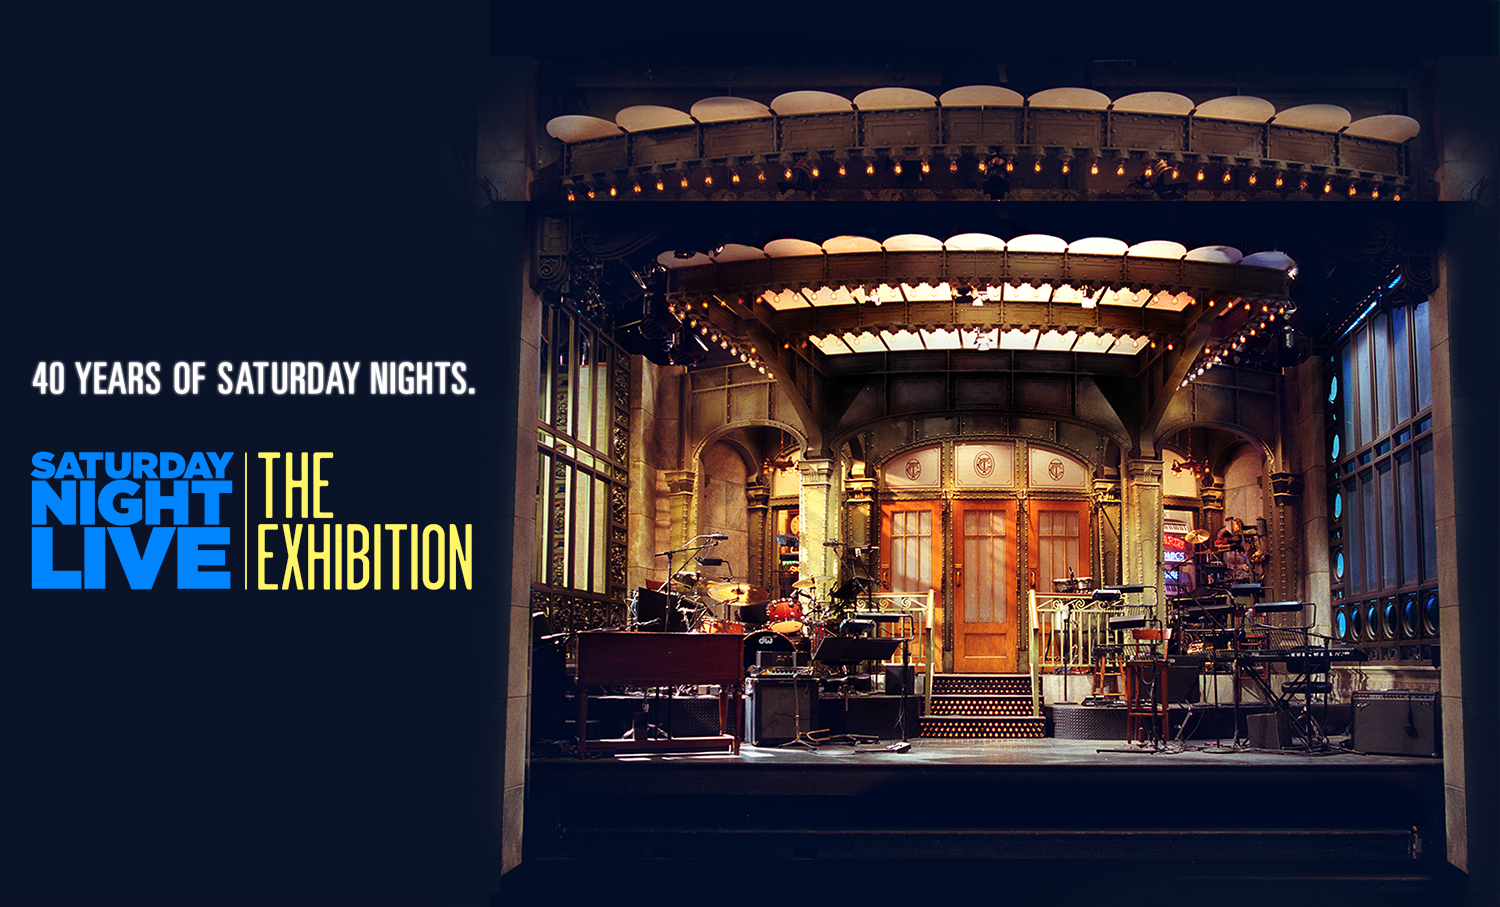 Saturday Night Live: The Exhibition at Premier Exhibitions 5th Avenue